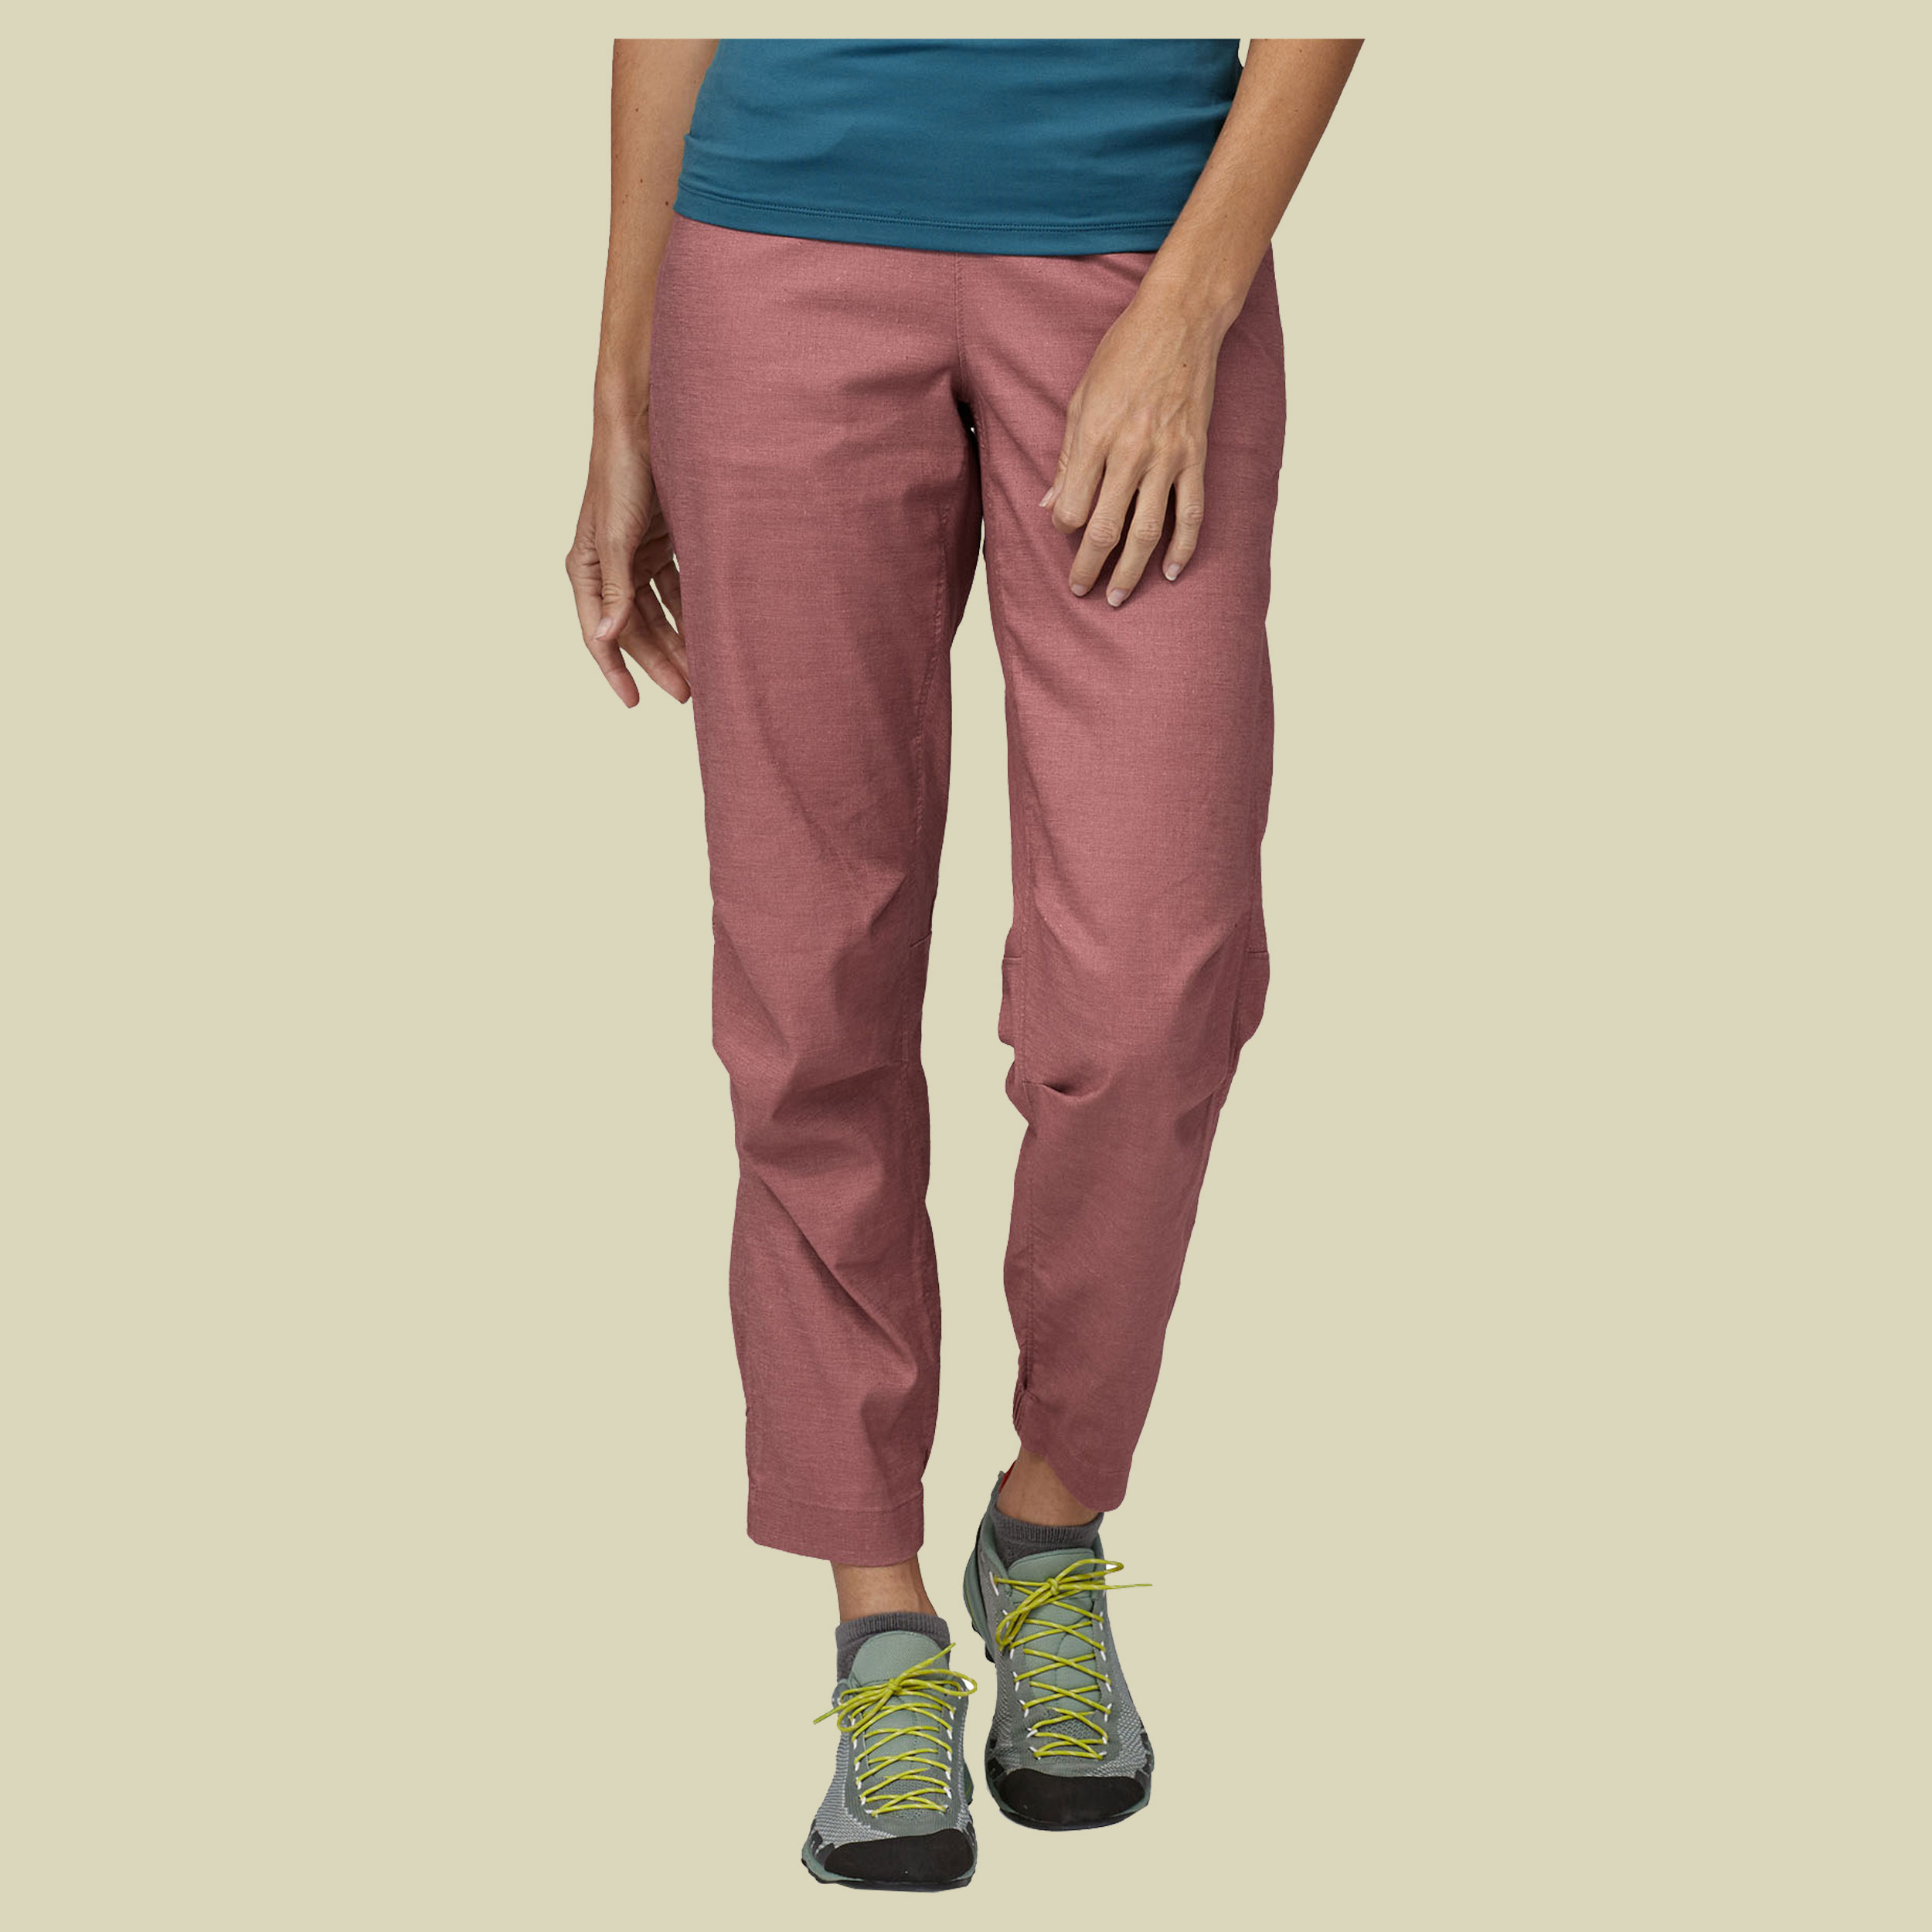 Hampi Rock Pants Women Größe XL (12) Farbe evening mauve